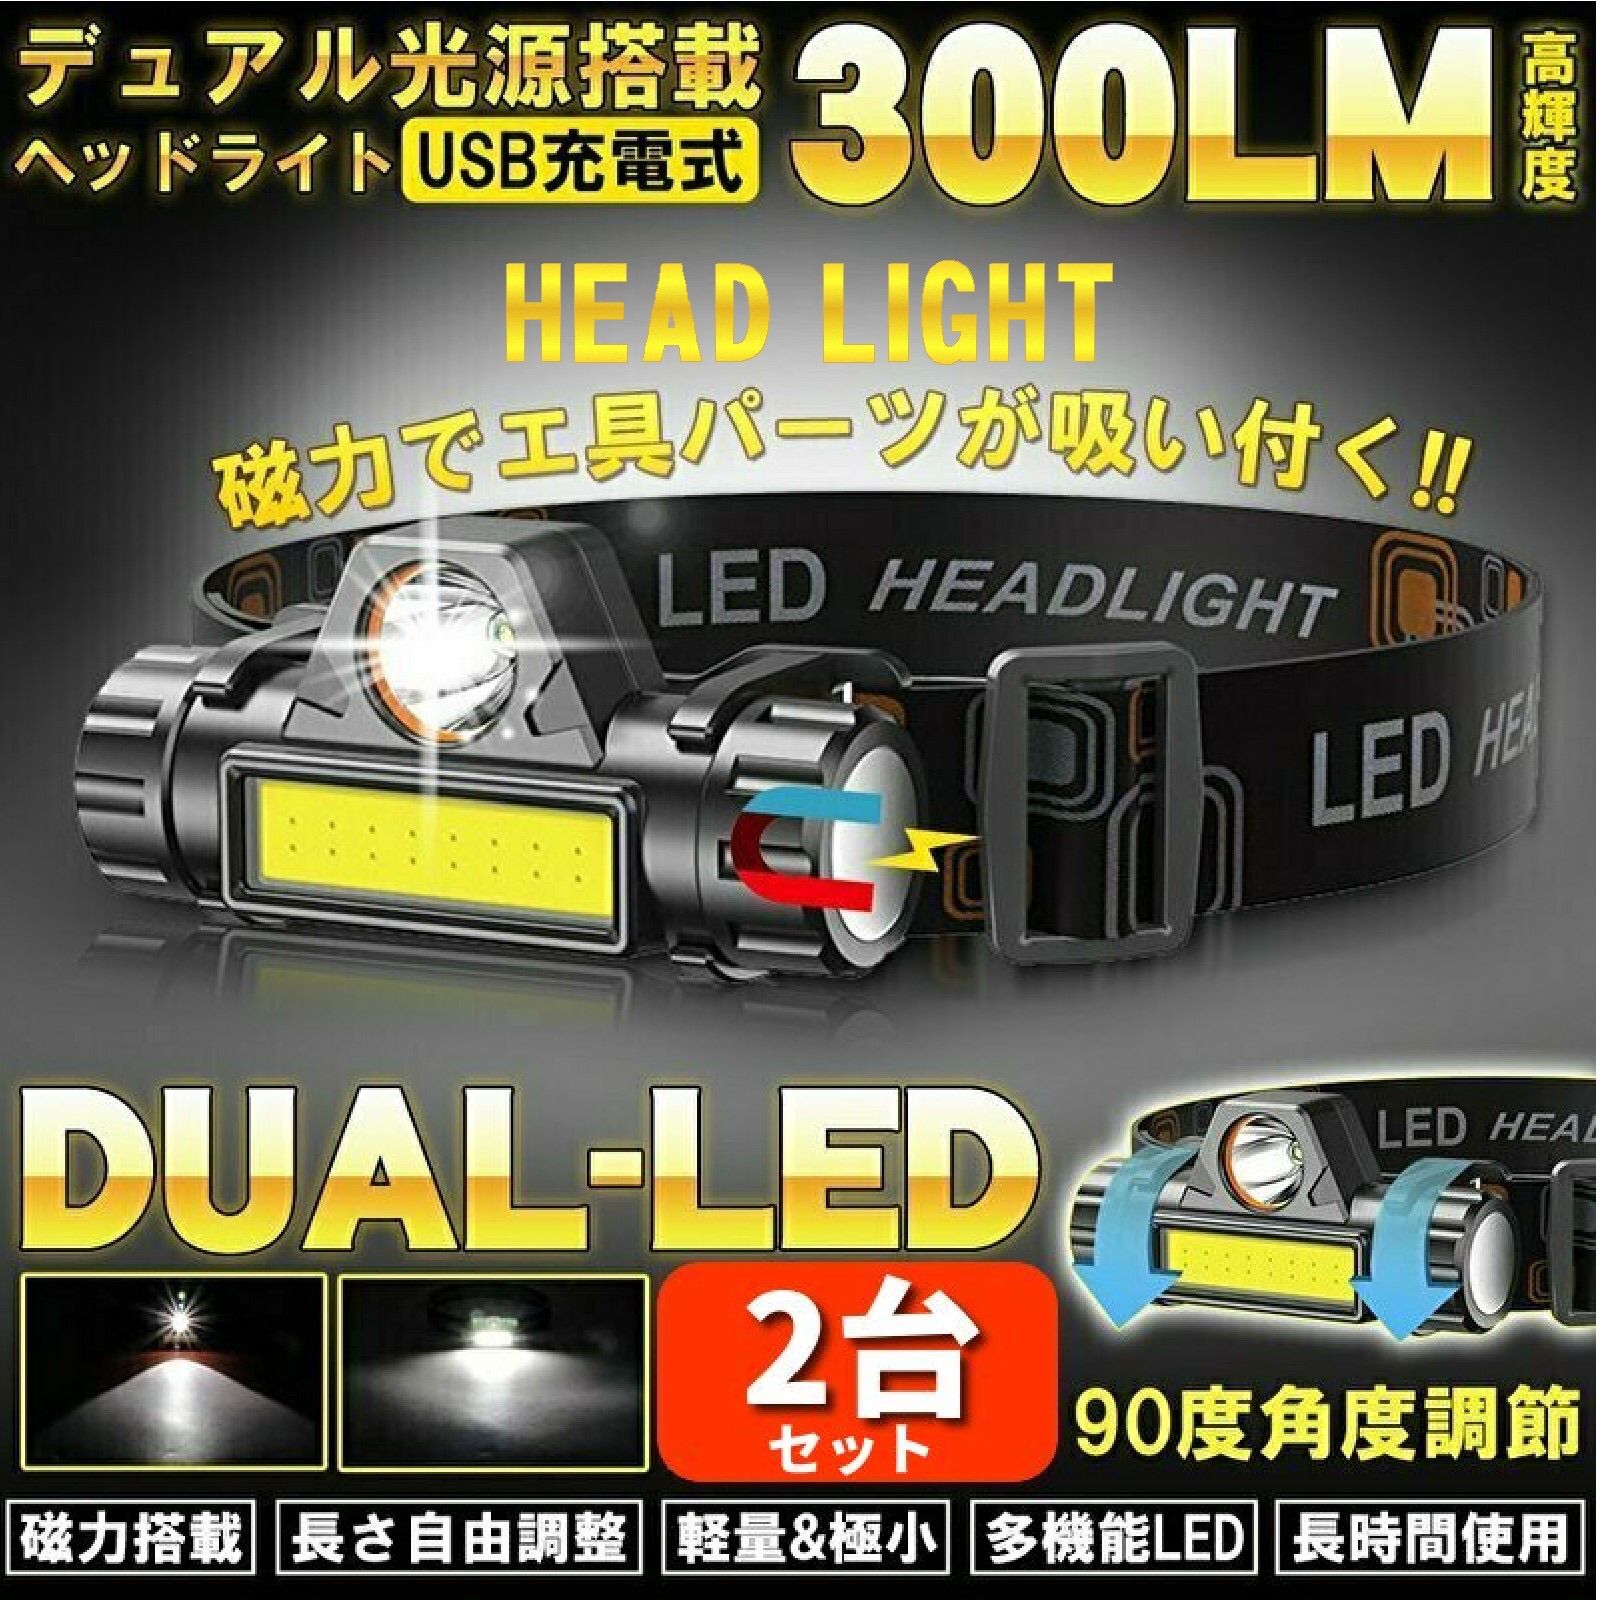 LEDヘッドライト 90°回転 USB充電式 キャンプ 登山 2個セット 藤宗雑貨店 メルカリ